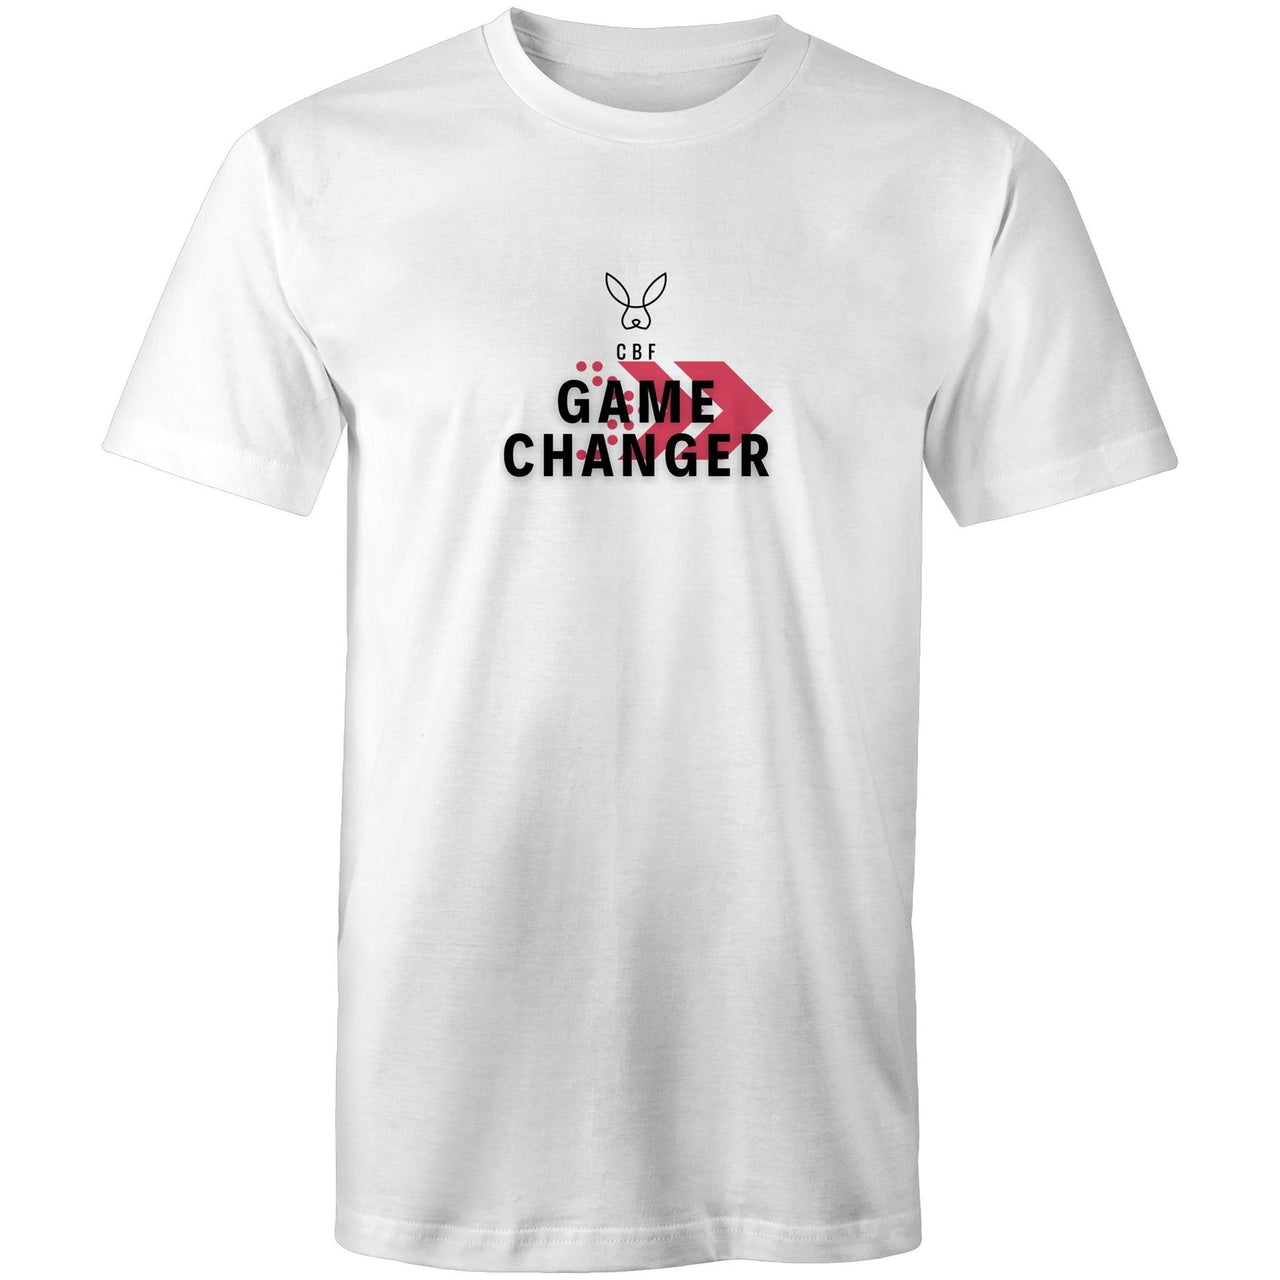 CBF Game Changer Unisex Mens Womens Crew T-Shirt white by CBF Clothing